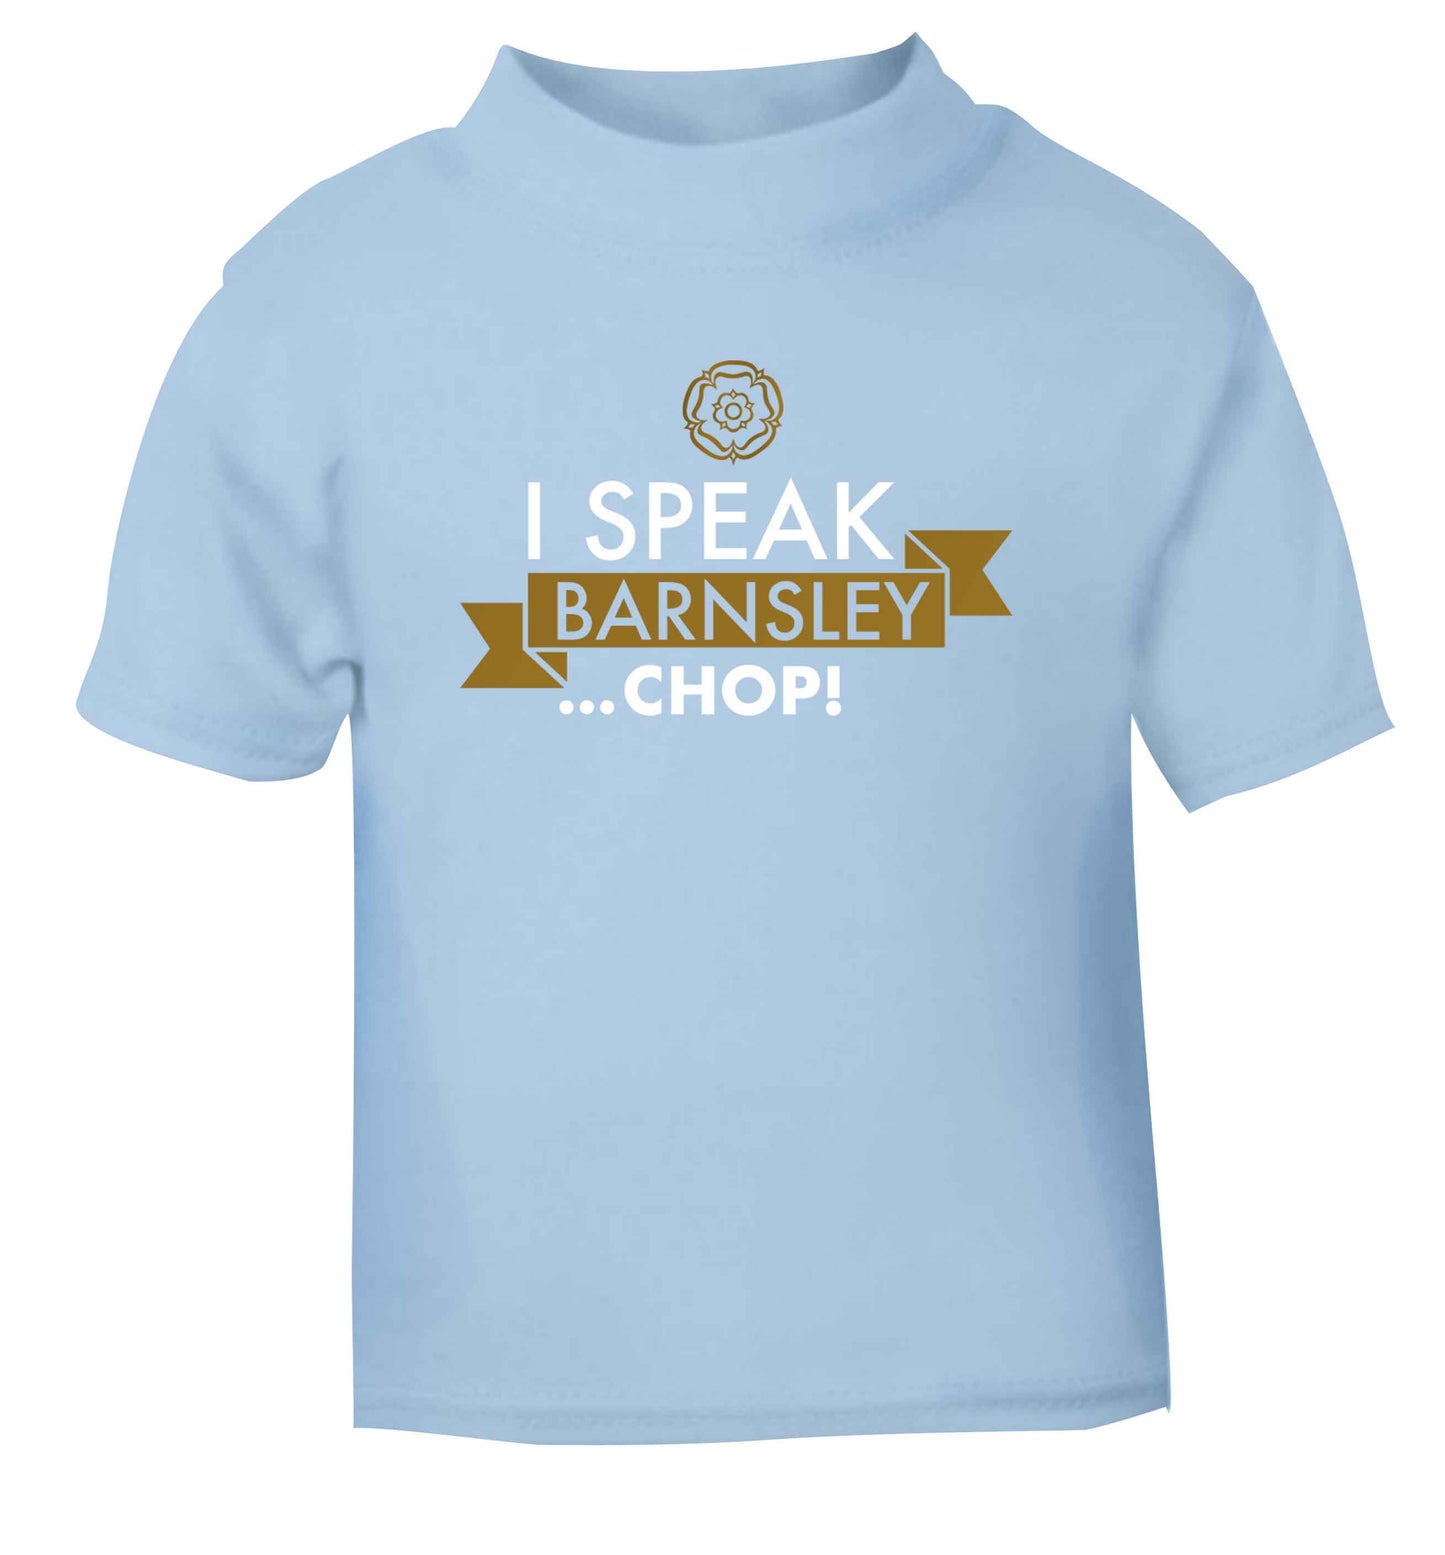 I speak Barnsley...chop! light blue Baby Toddler Tshirt 2 Years